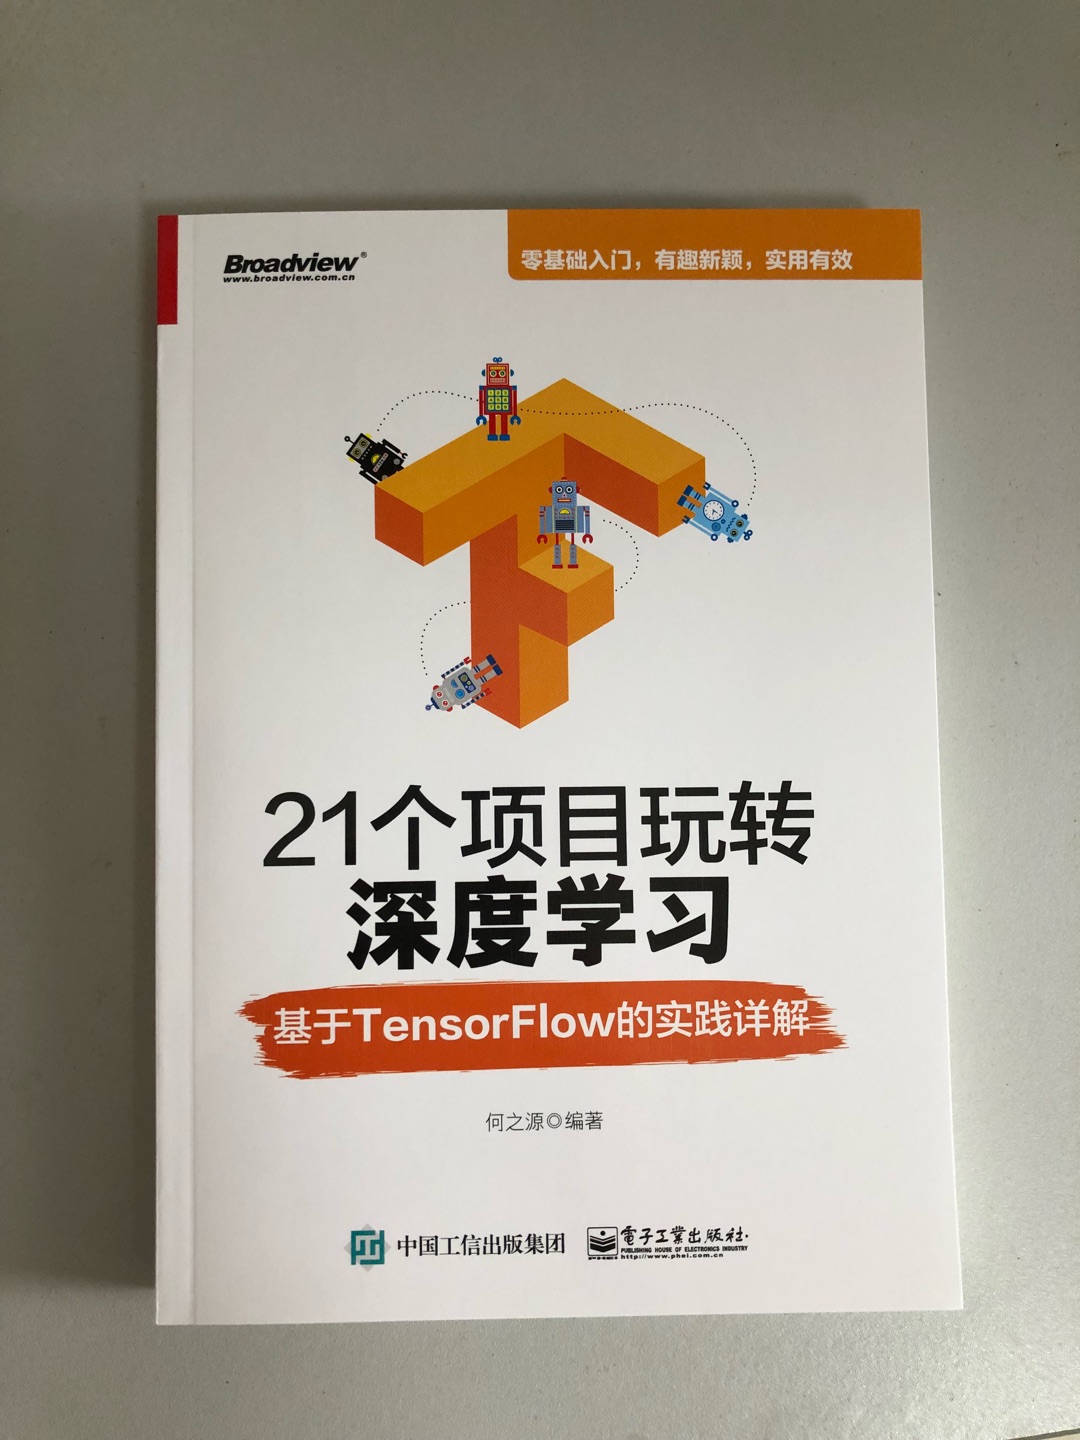 TensorFlow是谷歌基于DistBelief进行研发的第二代人工智能学习系统，其命名来源于本身的运行原理。Tensor（张量）意味着N维数组，Flow（流）意味着基于数据流图的计算，TensorFlow为张量从流图的一端流动到另一端计算过程。TensorFlow是将复杂的数据结构传输至人工智能神经网中进行分析和处理过程的系统。